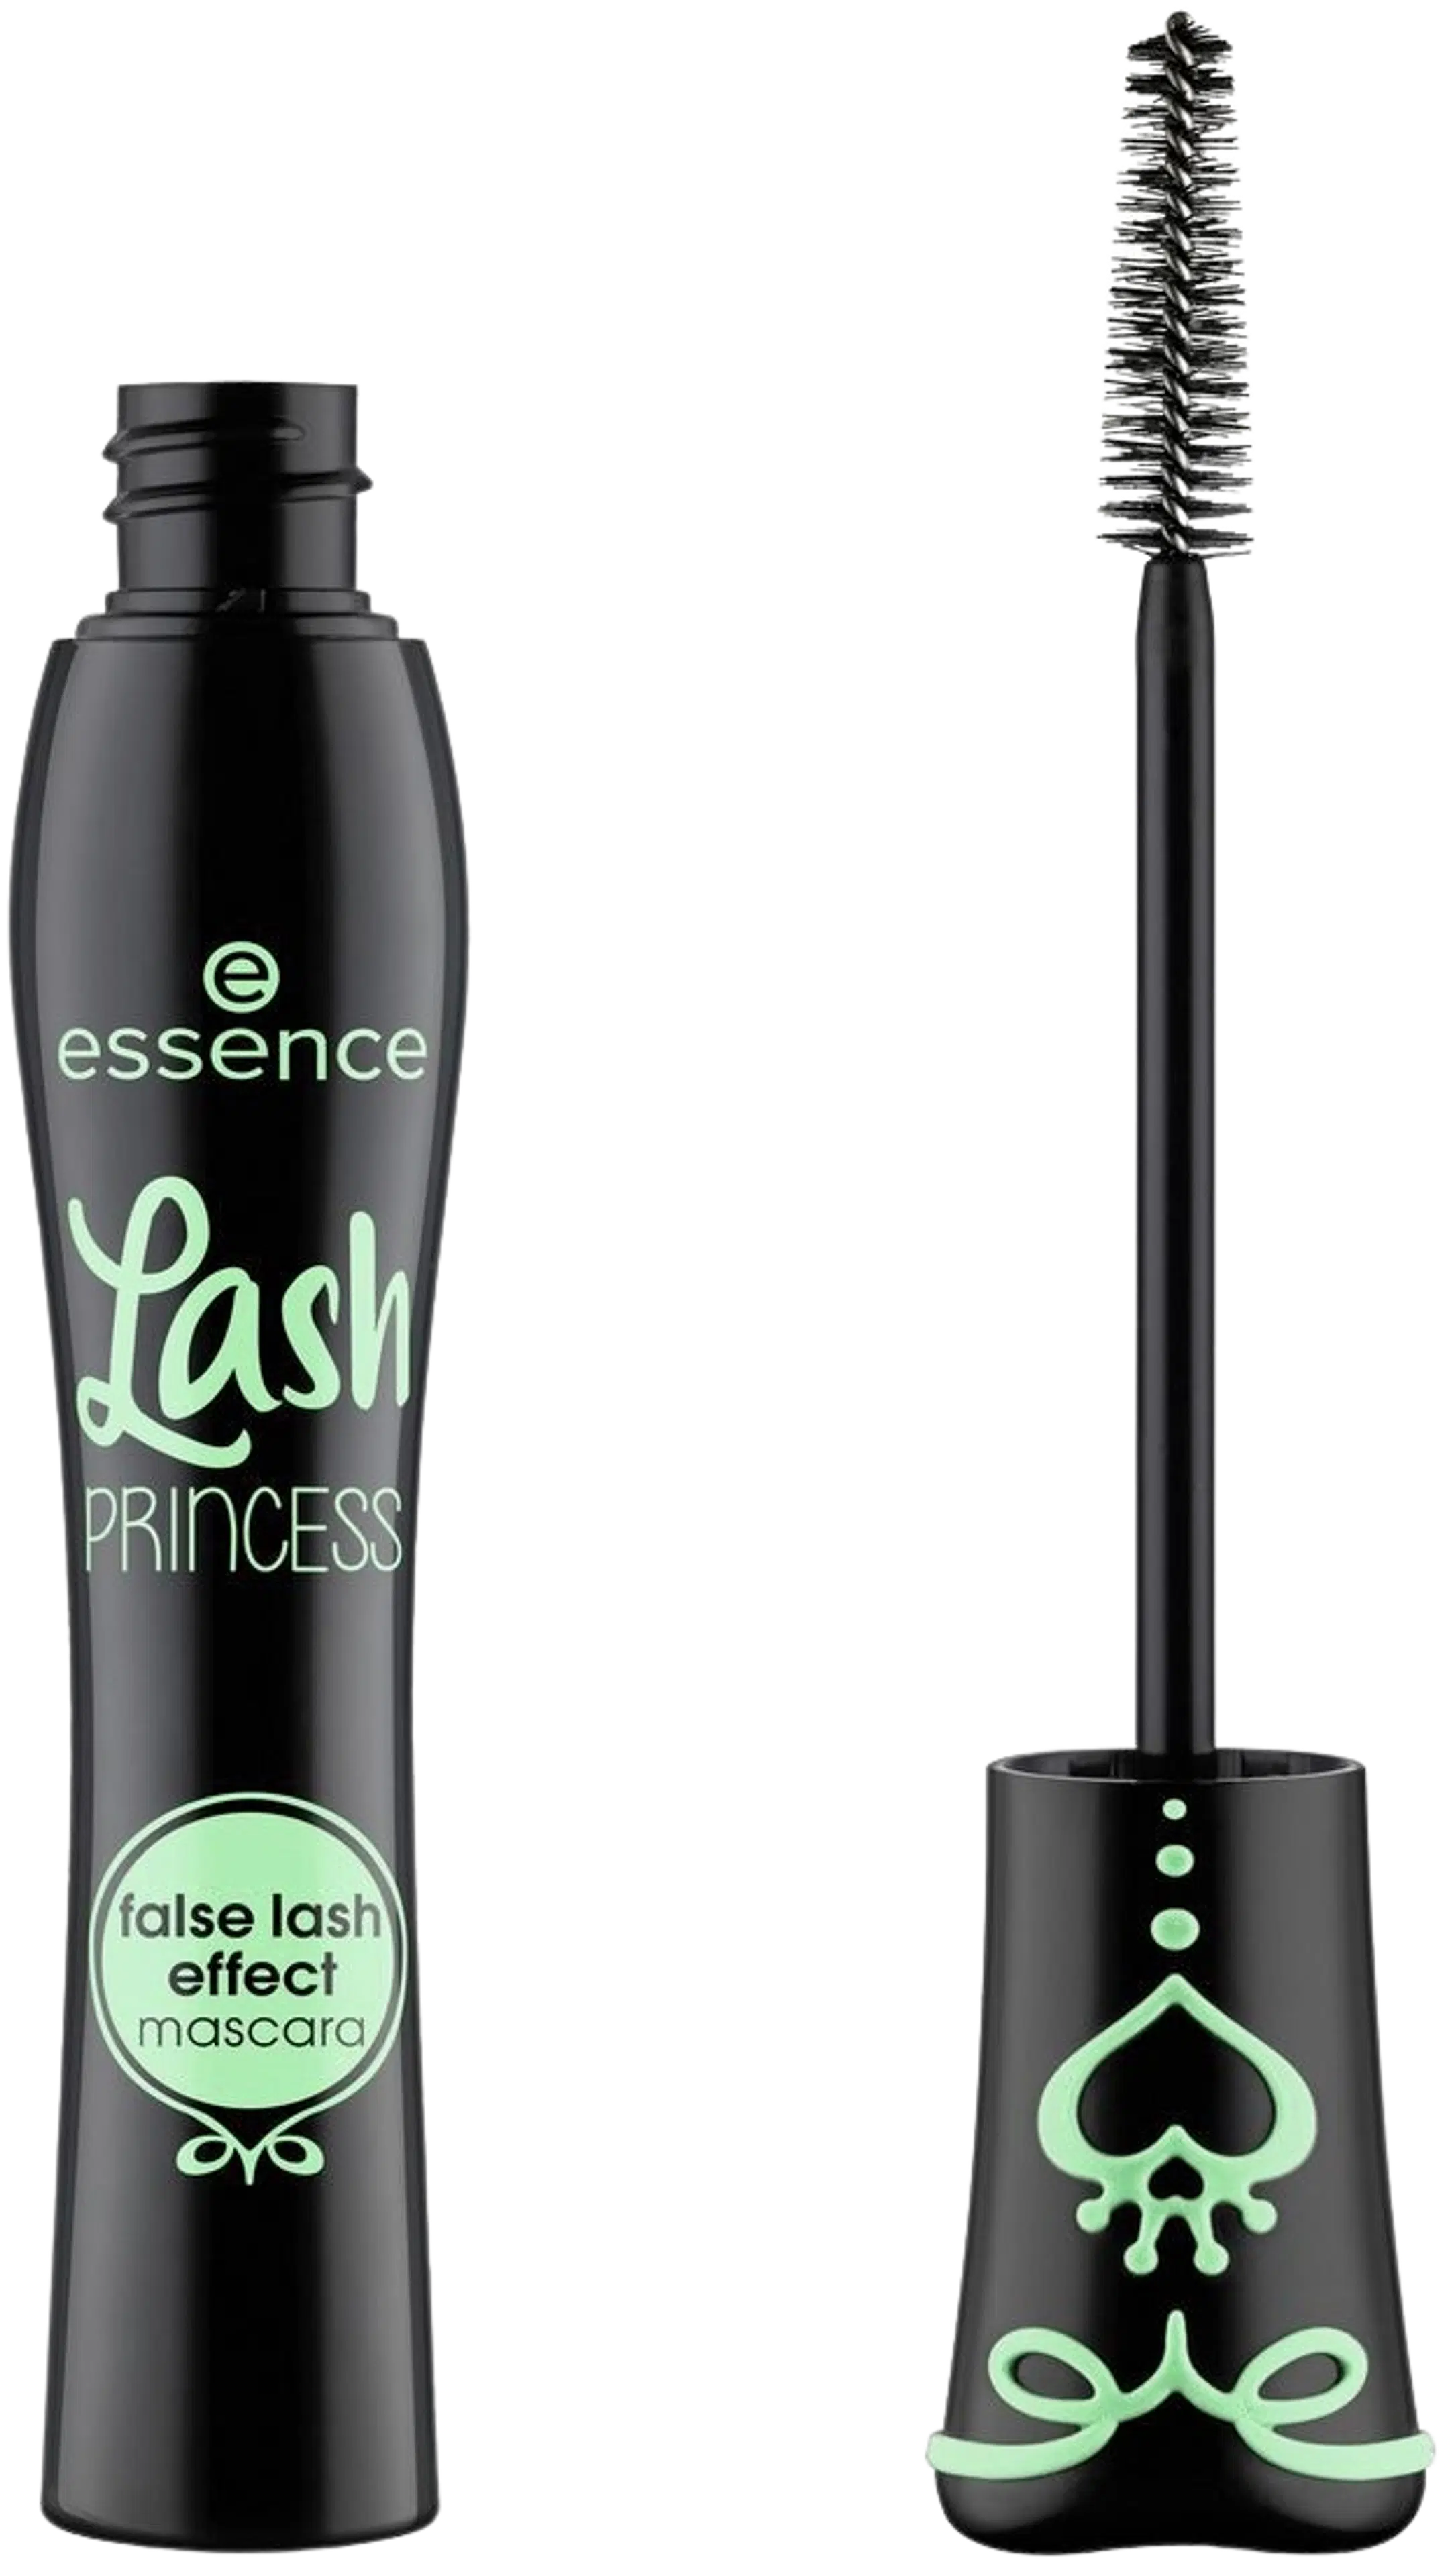 essence Lash PRINCESS false lash effect mascara 12 ml